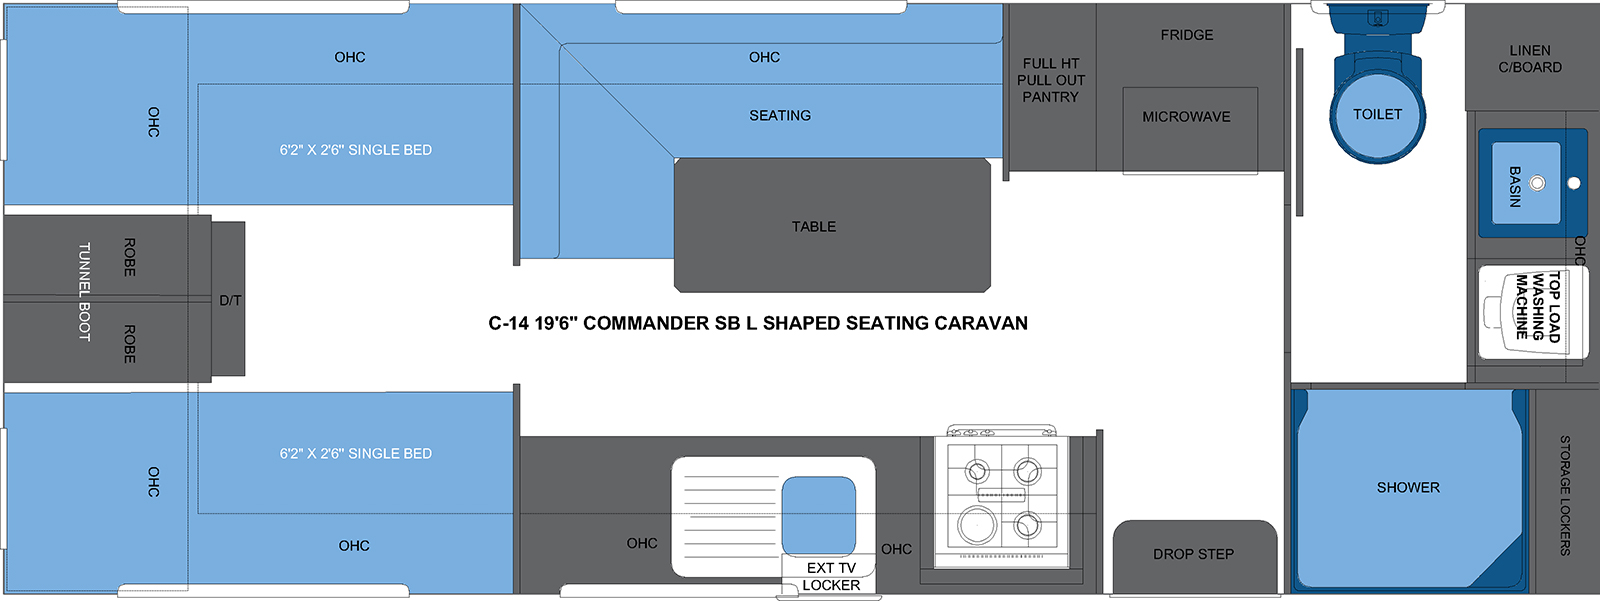 C-14 19'6 COMMANDER SB L SHAPED SEATING CARAVAN